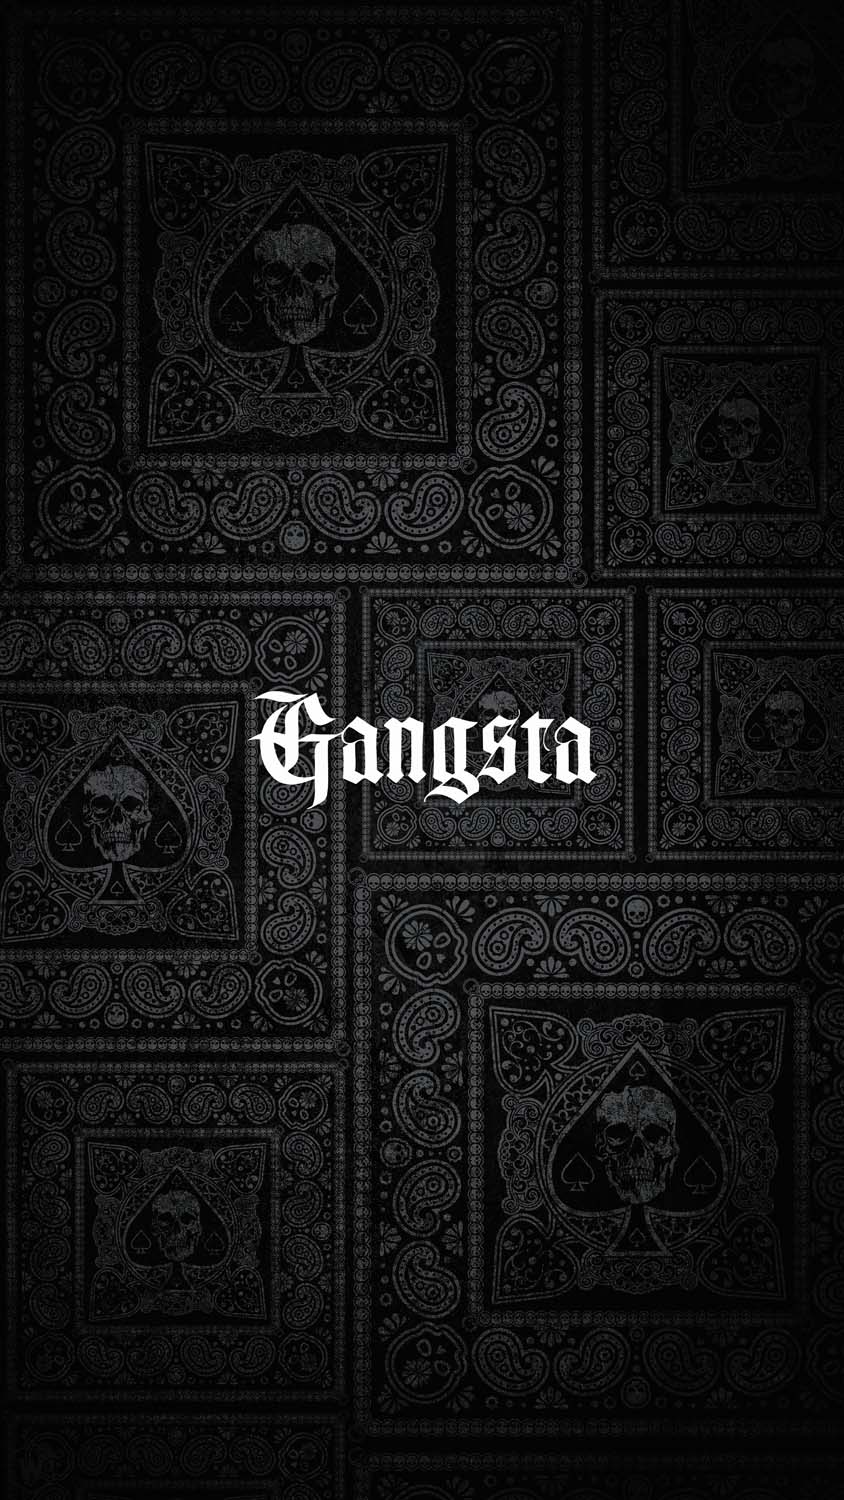 Gangsta IPhone Wallpaper HD  IPhone Wallpapers